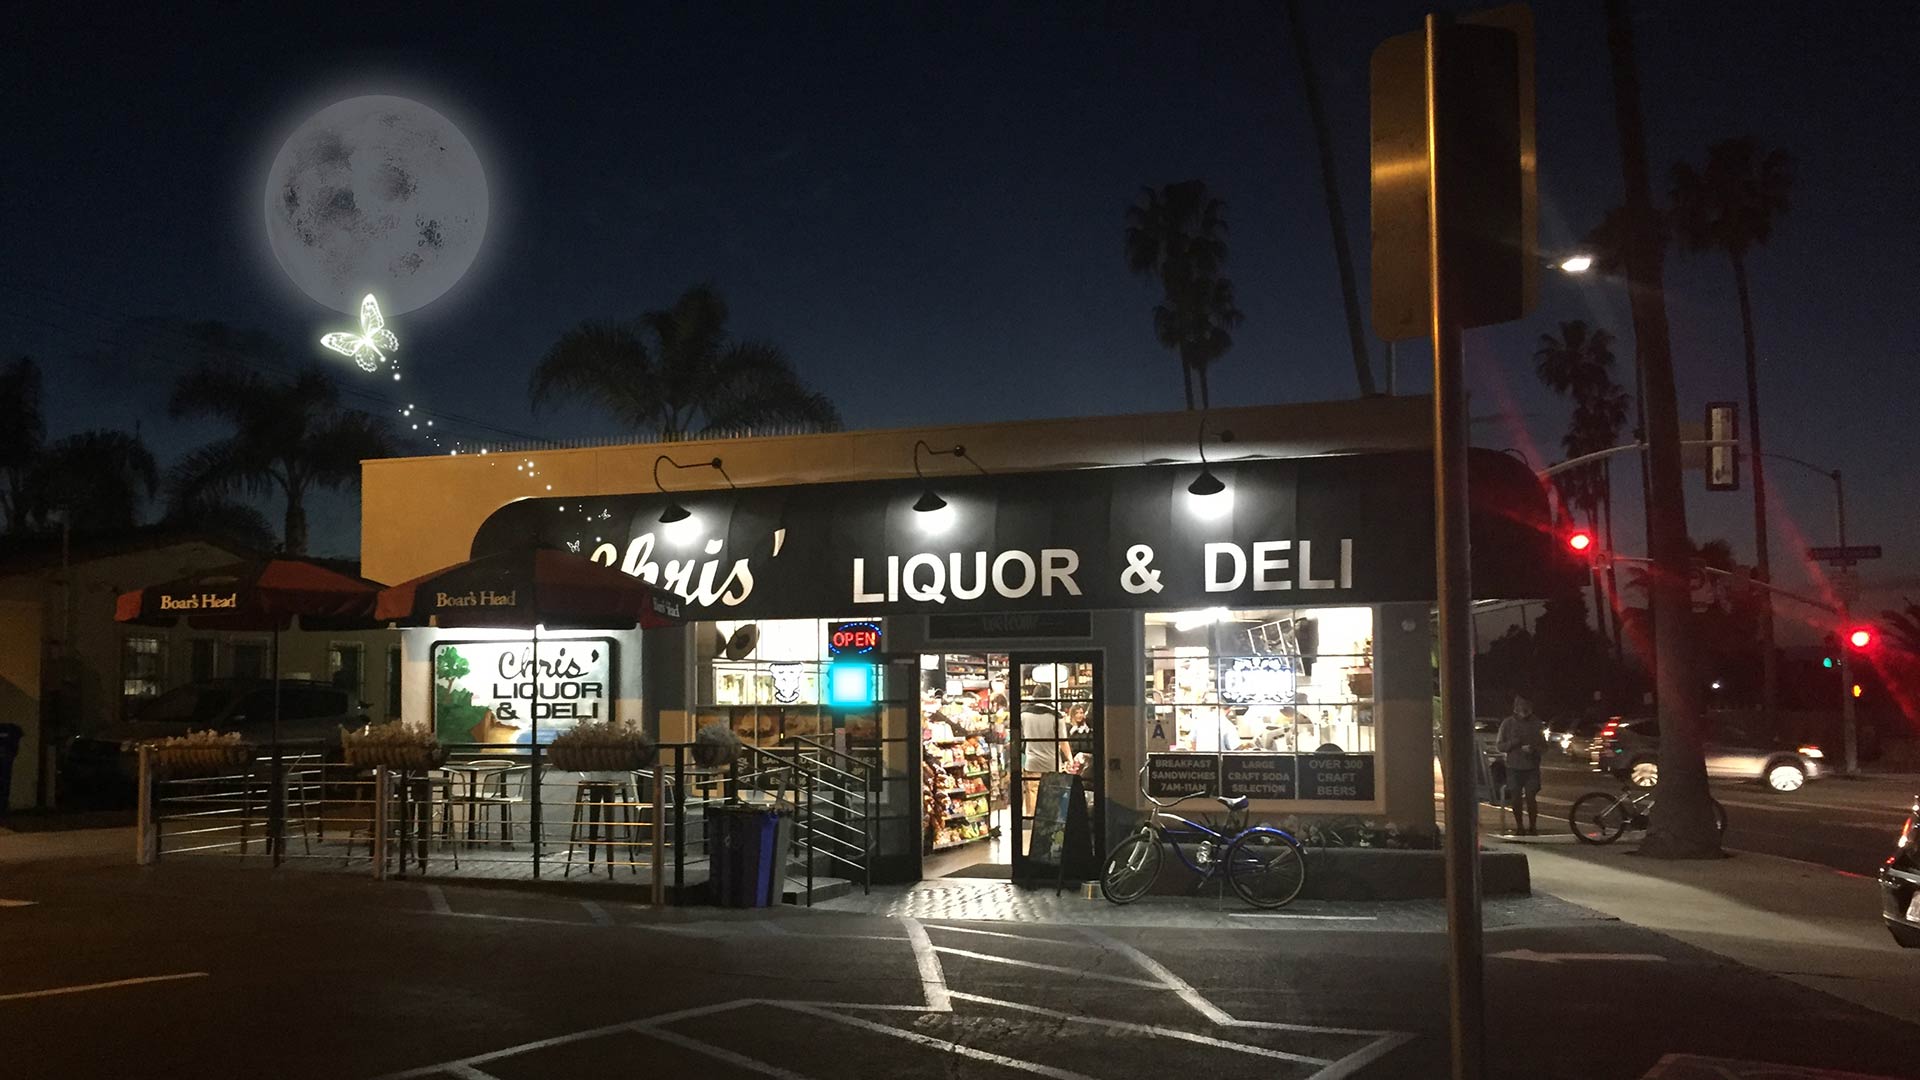 Chris' Liquor & Deli